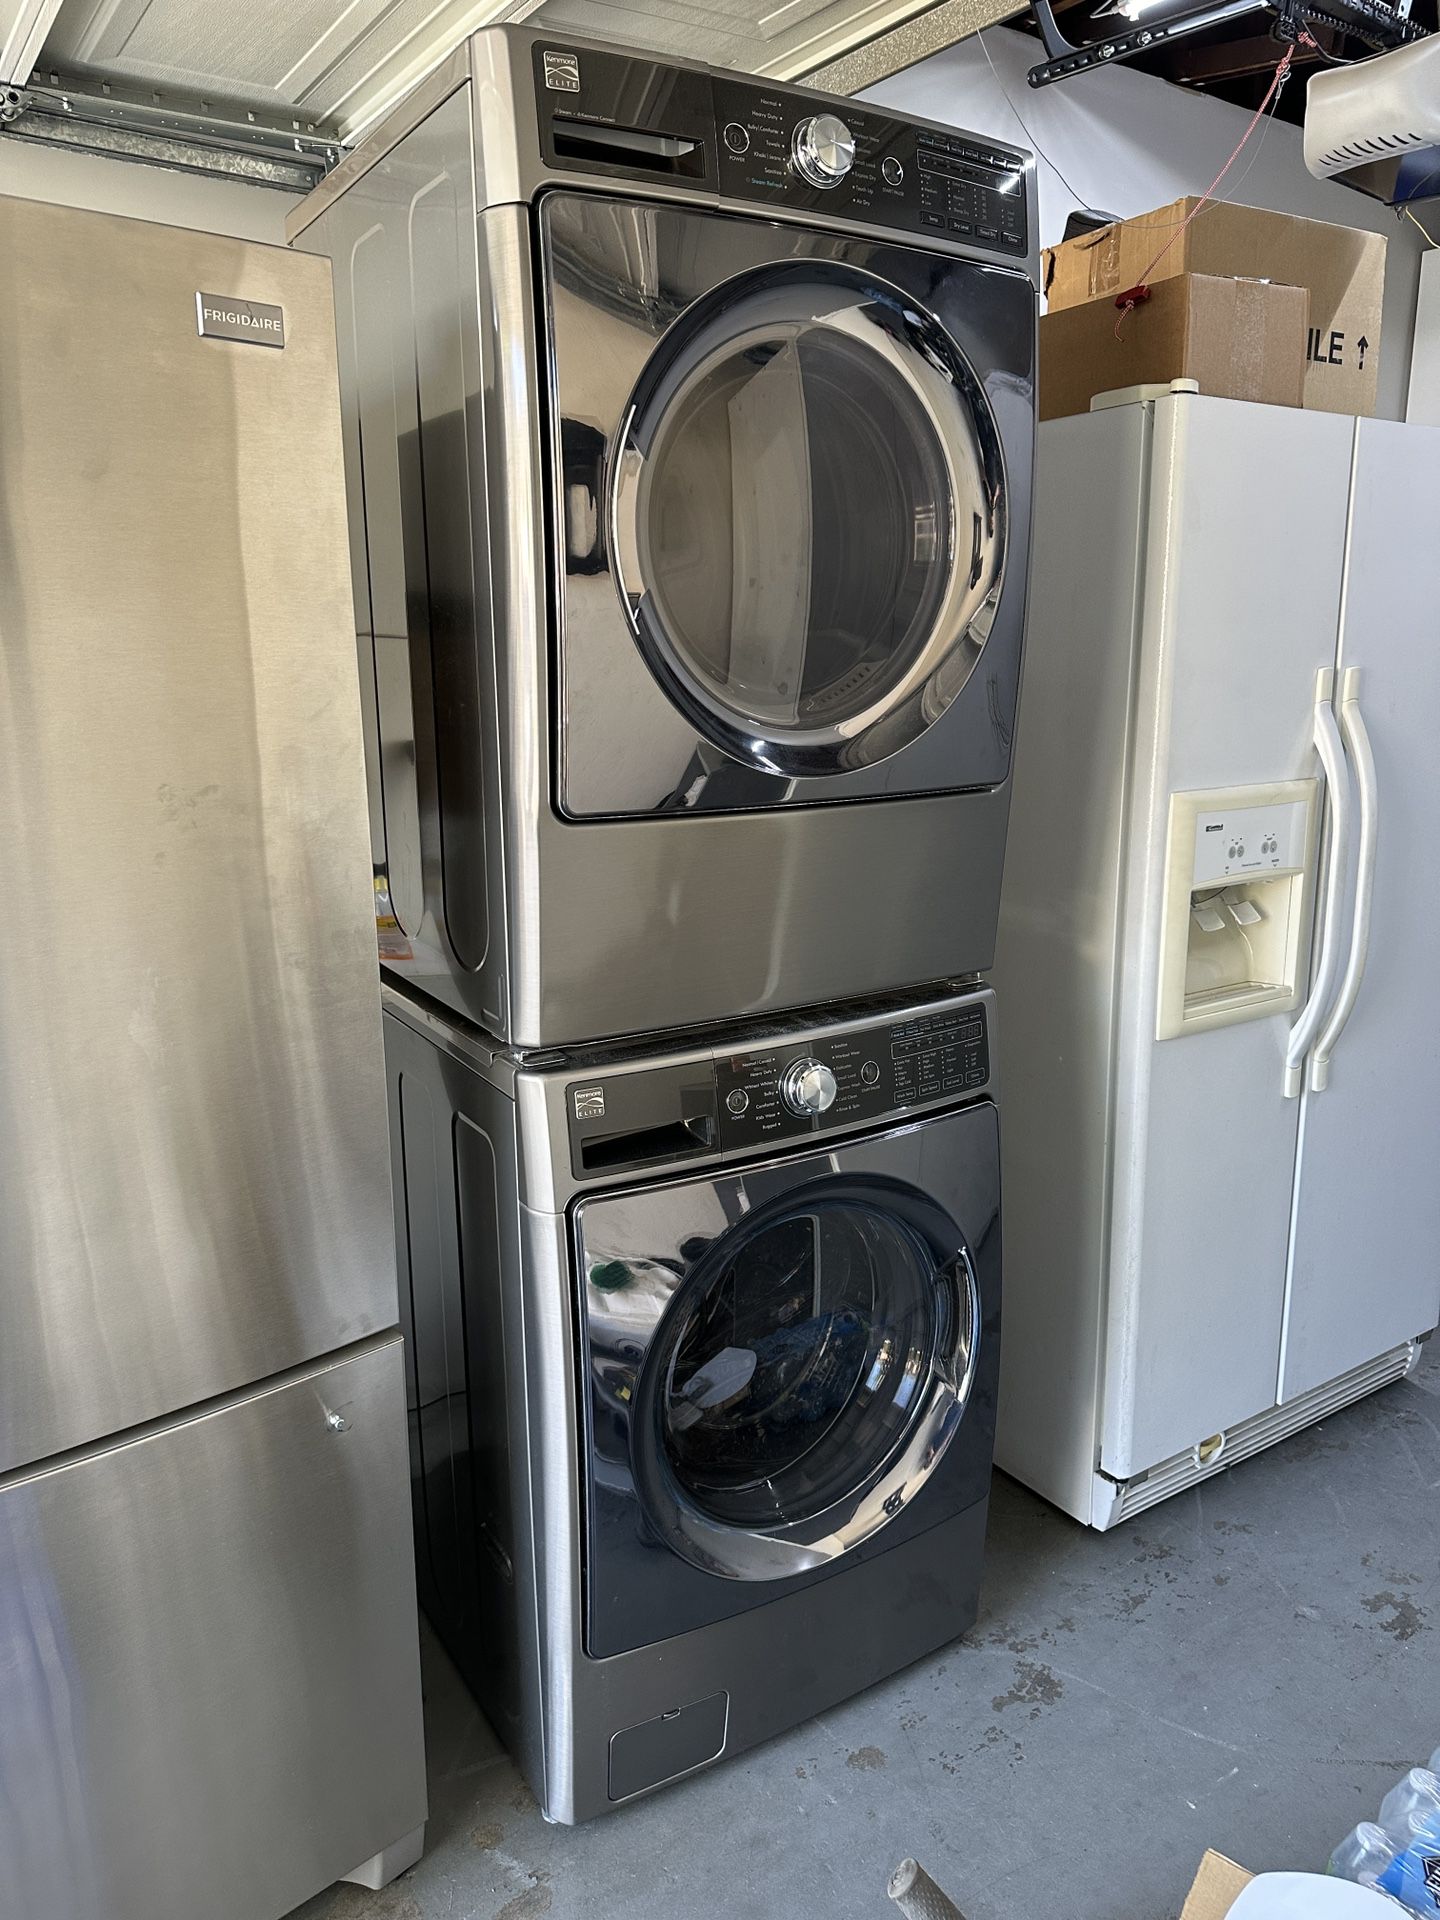 Kenmore Elite Washer Dryer